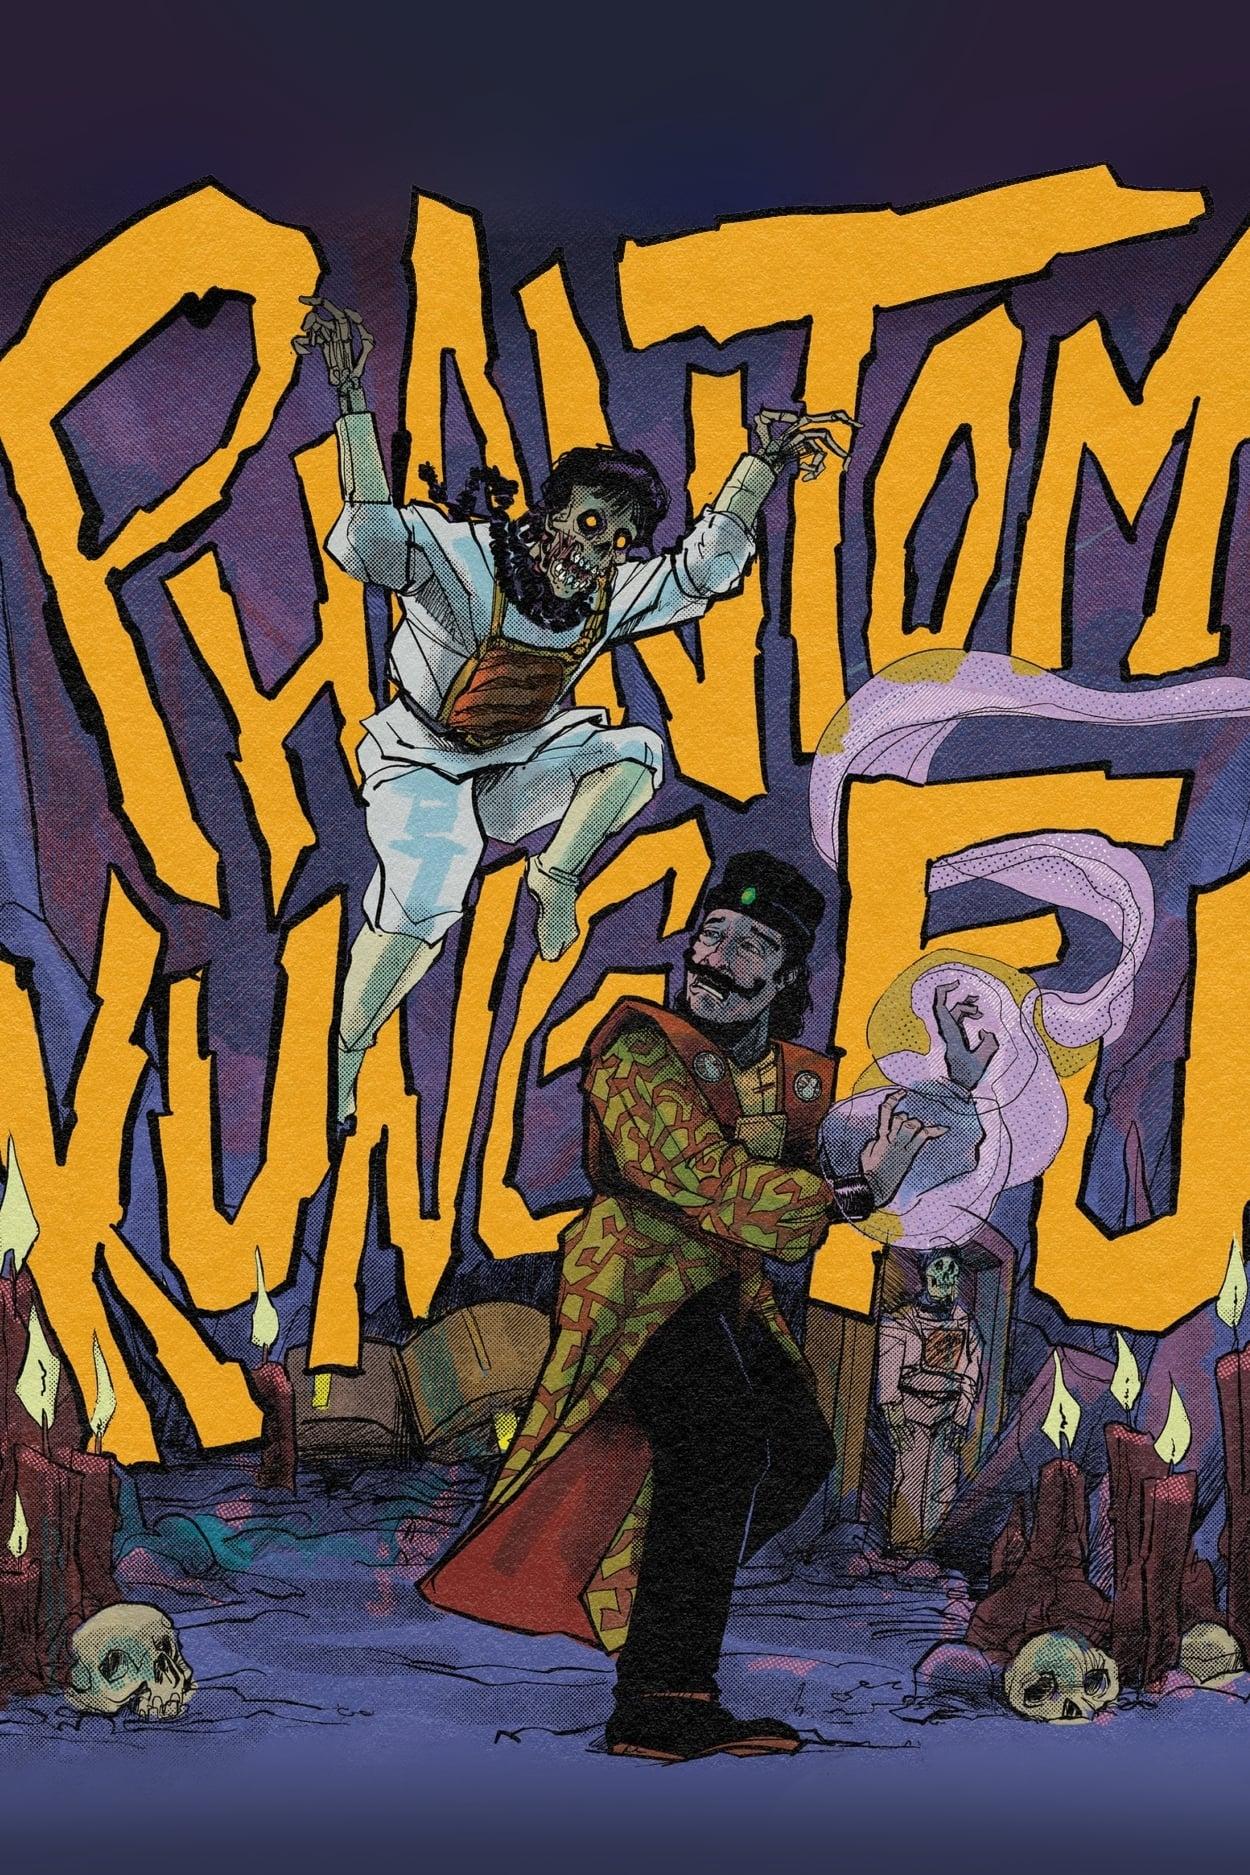 Phantom Kung Fu poster